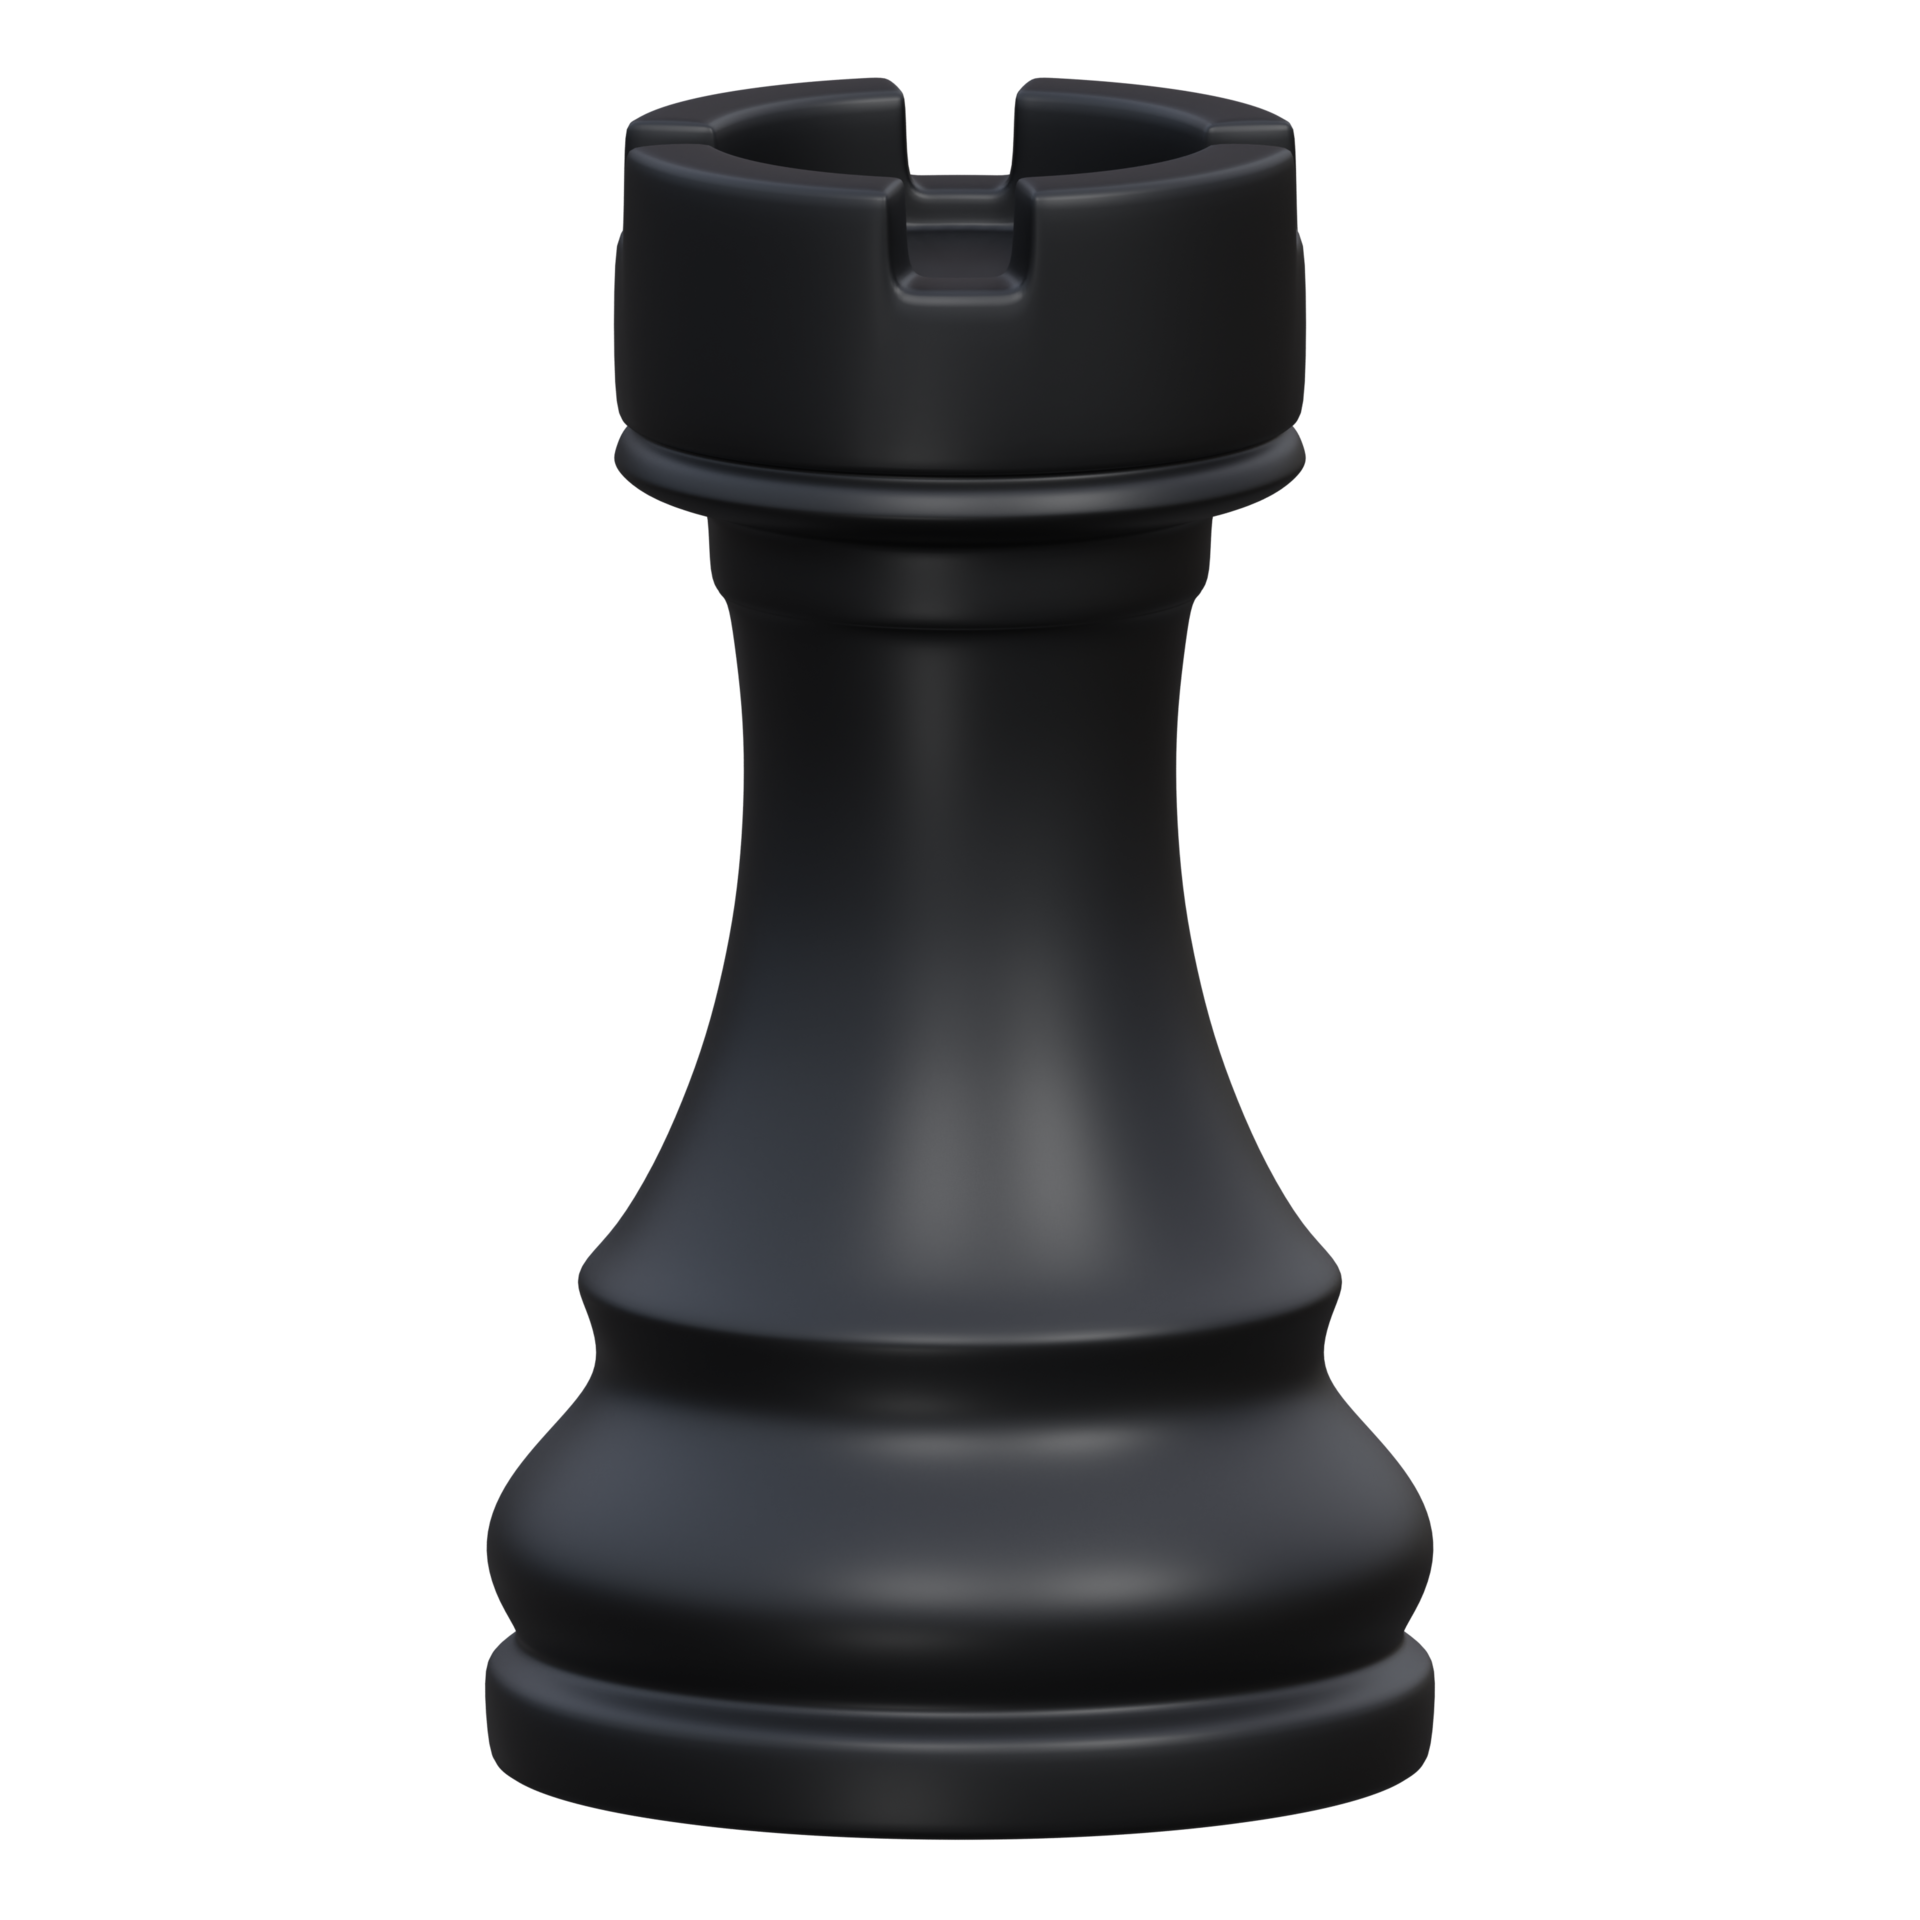 Ícone 3d do jogo de xadrez